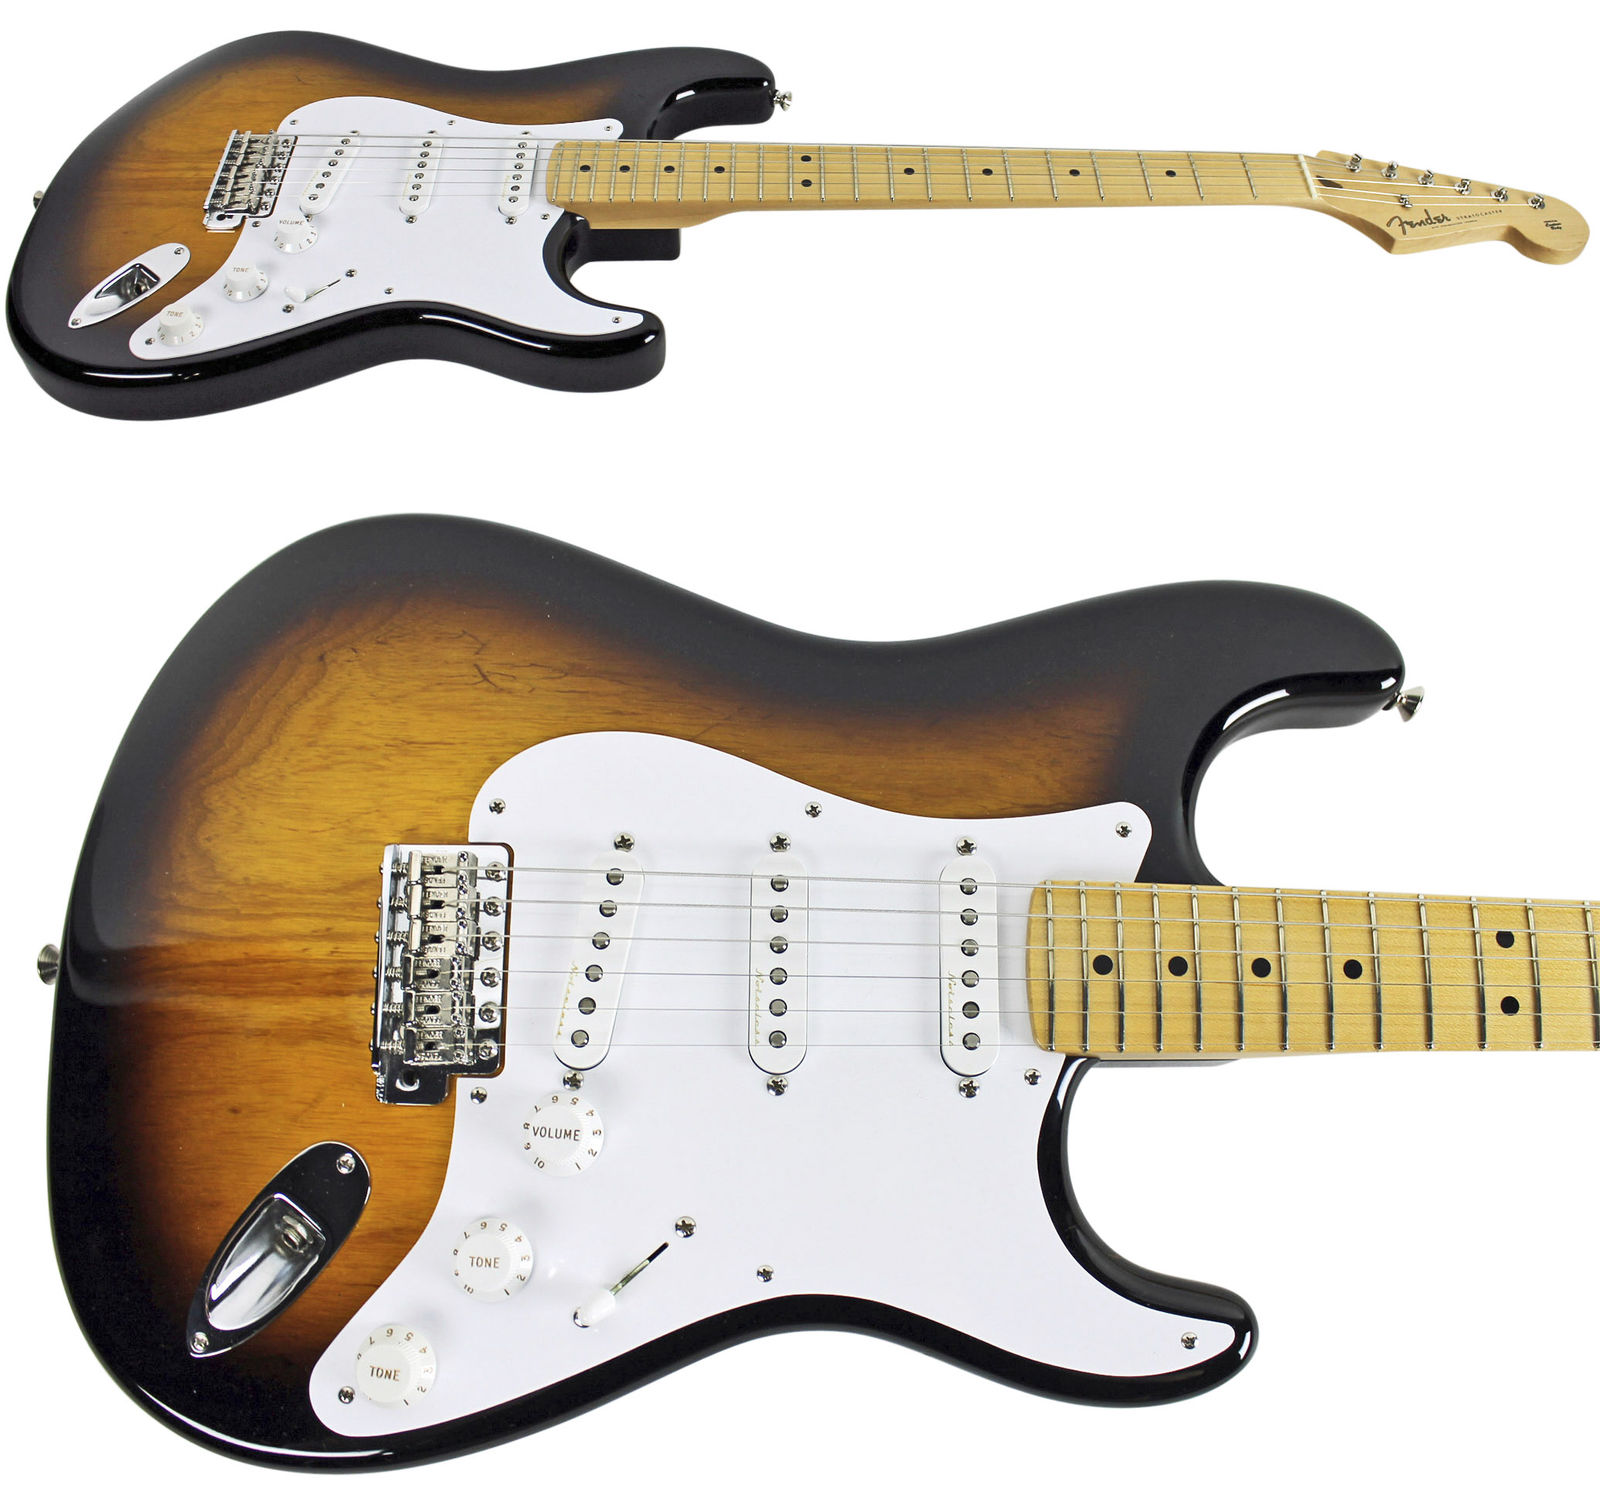 EC_2014 Fender Strat Ebay.jpg